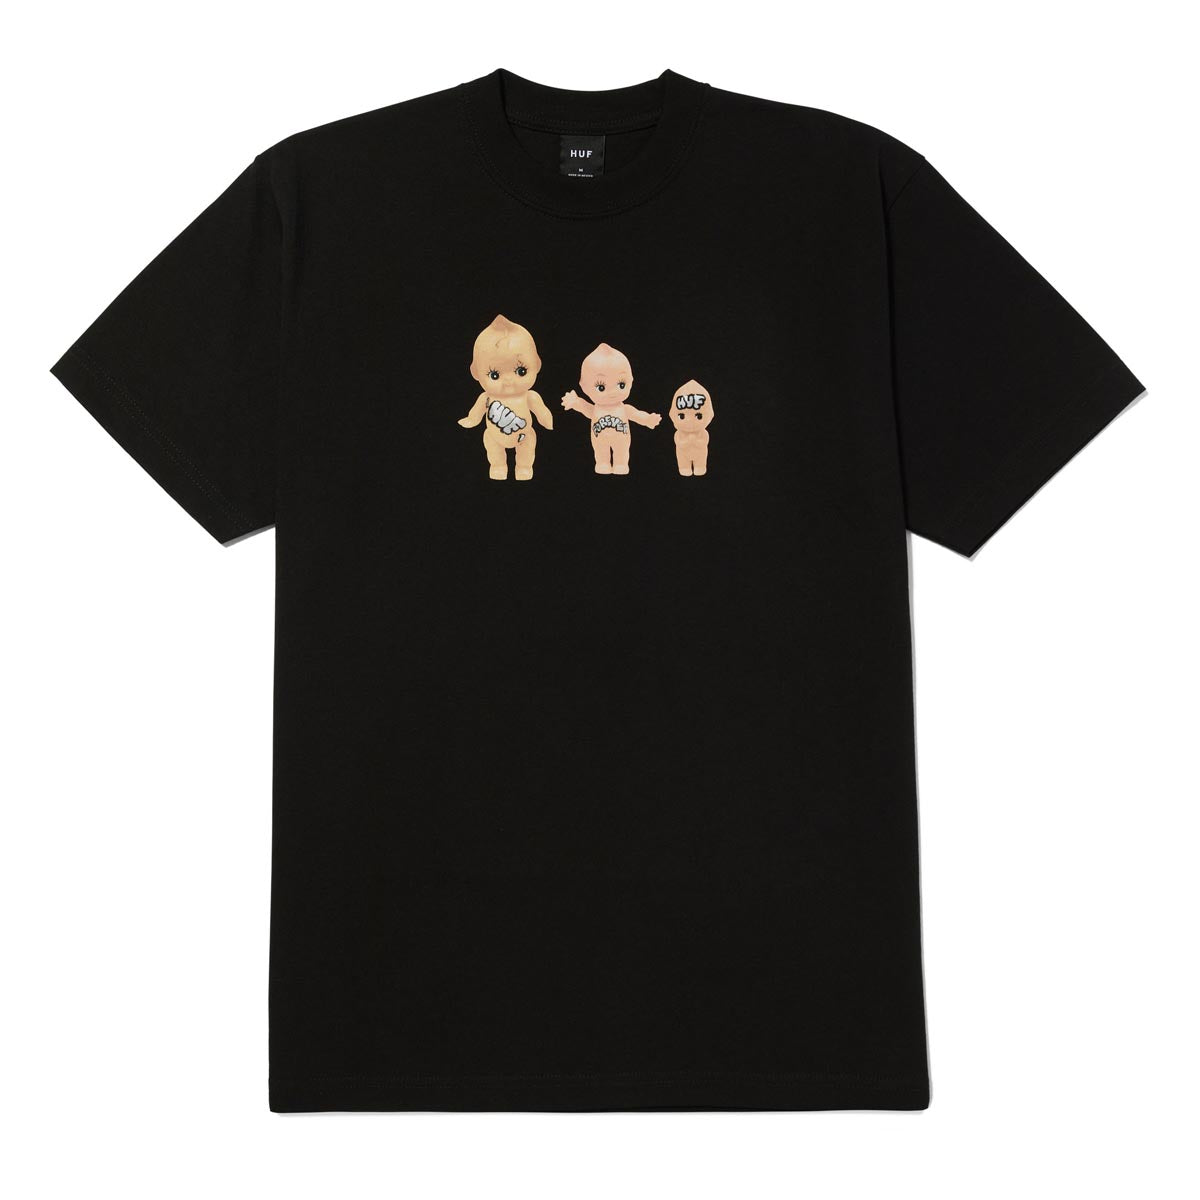 HUF Rizzo T-Shirt - Black image 1